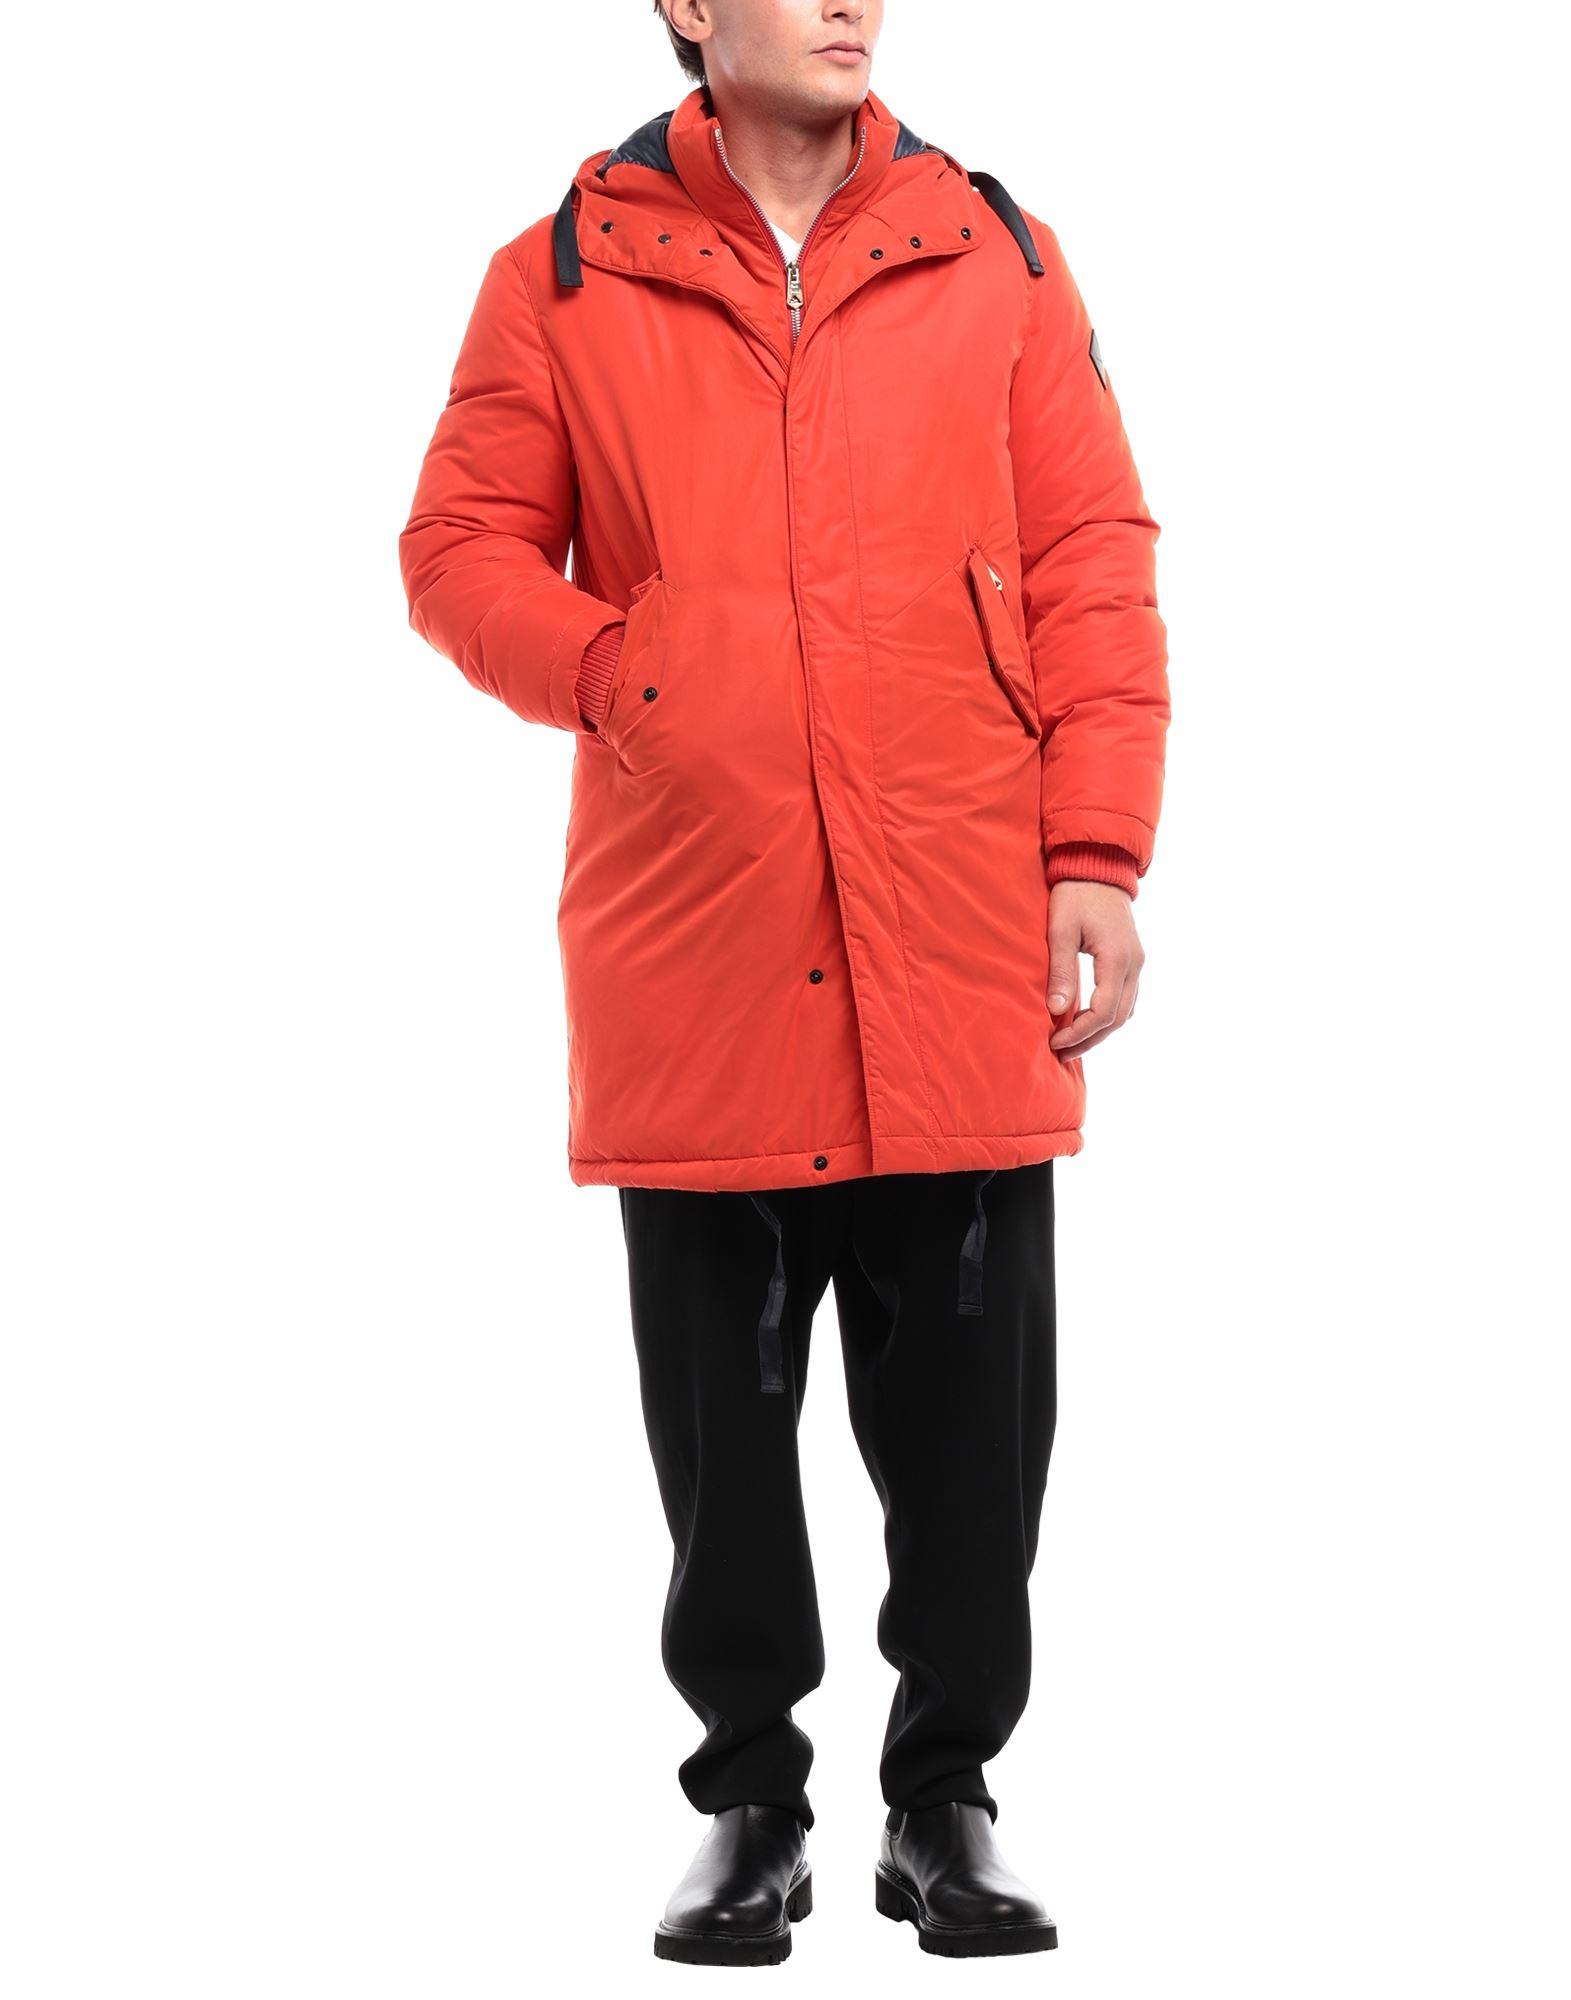 Paul Smith Synthetic Coat in Orange for Men - Lyst